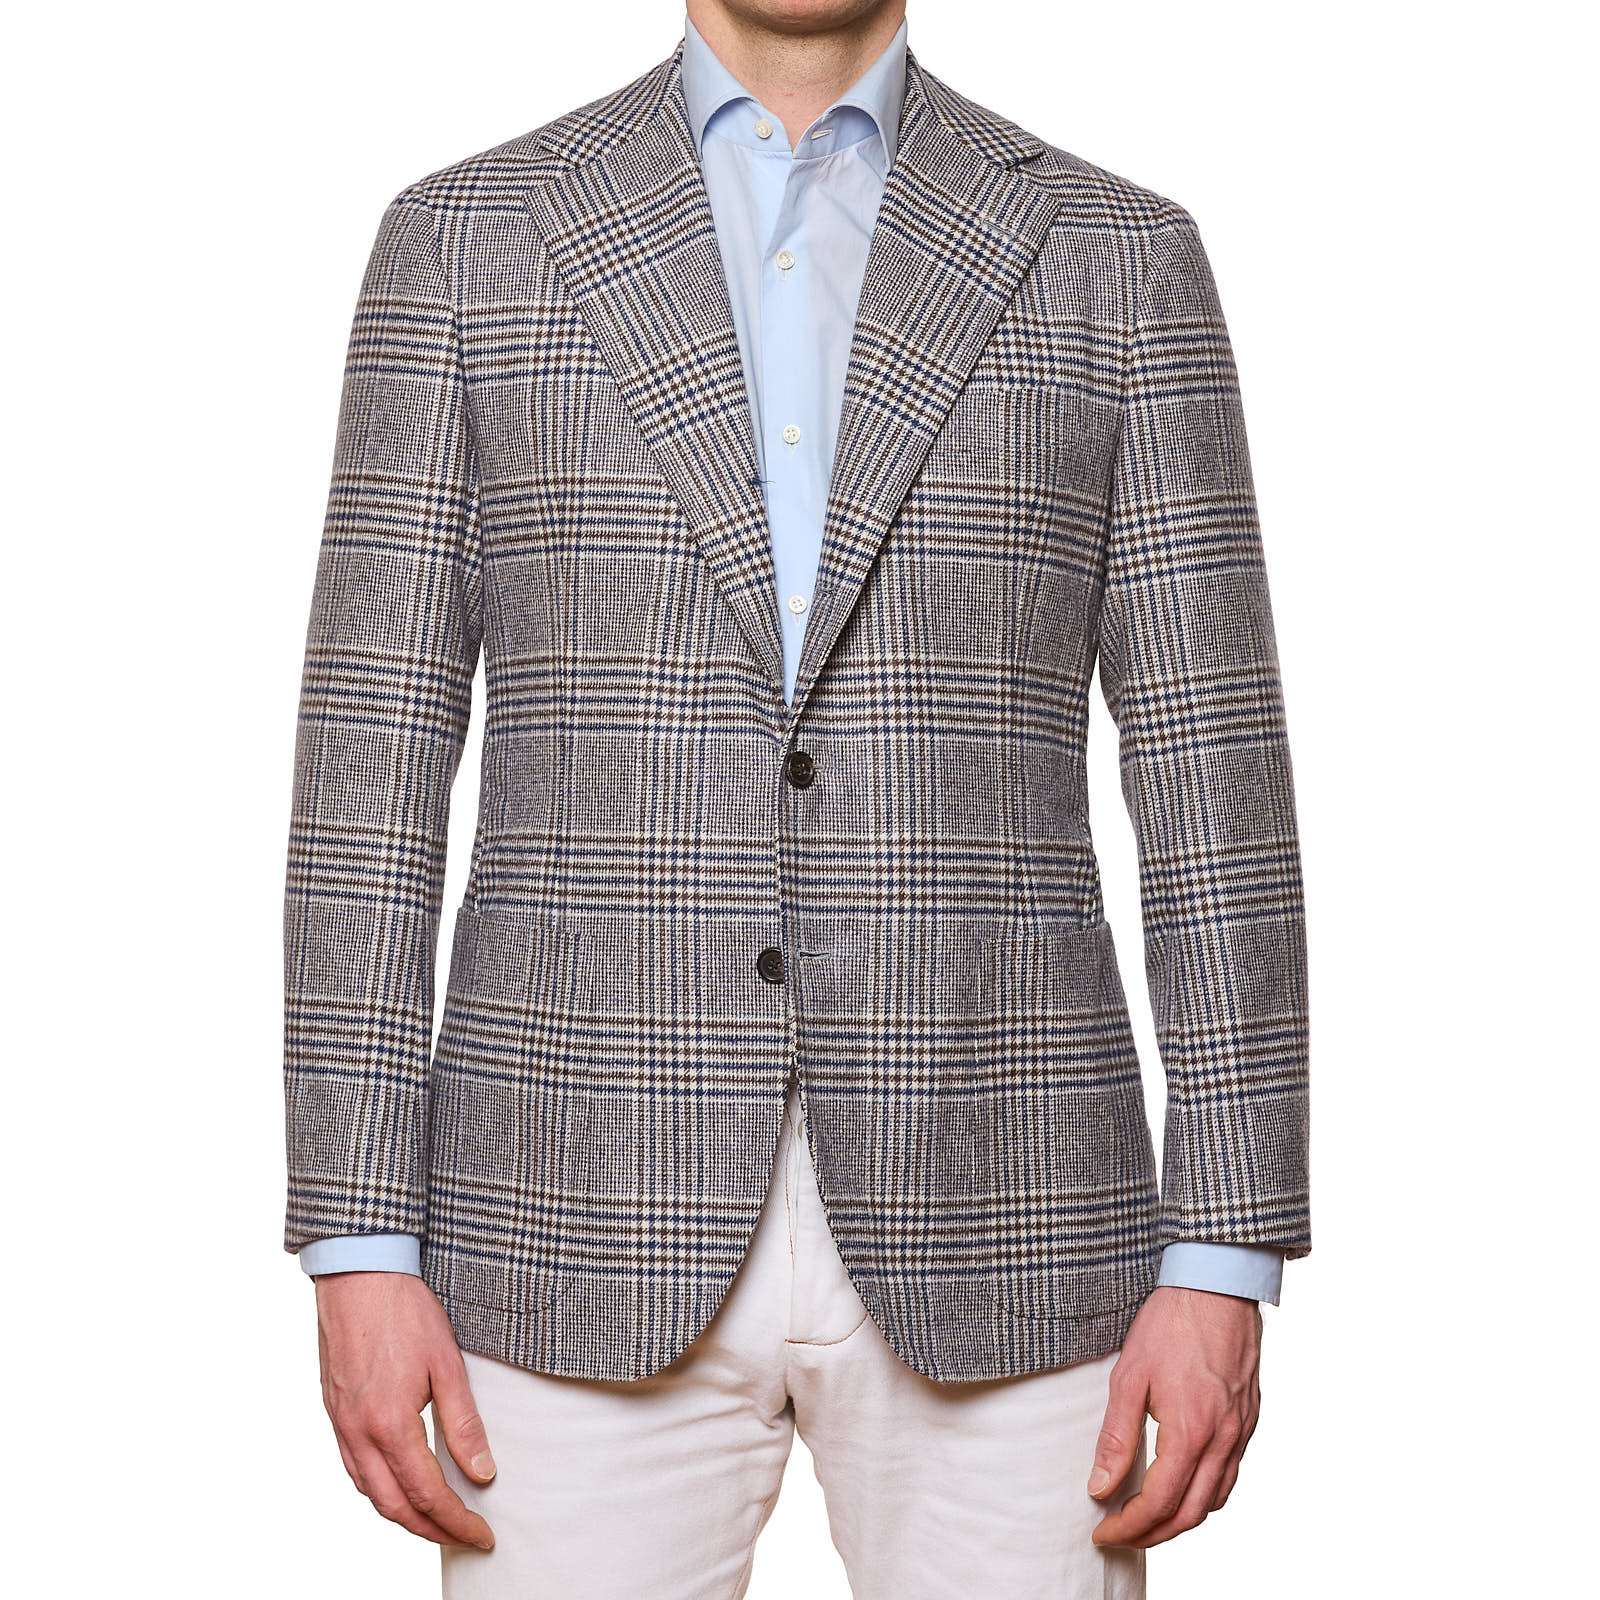 SARTORIA SOLITO Napoli Multicolor Plaid Wool Jacket EU 48 NEW US 38